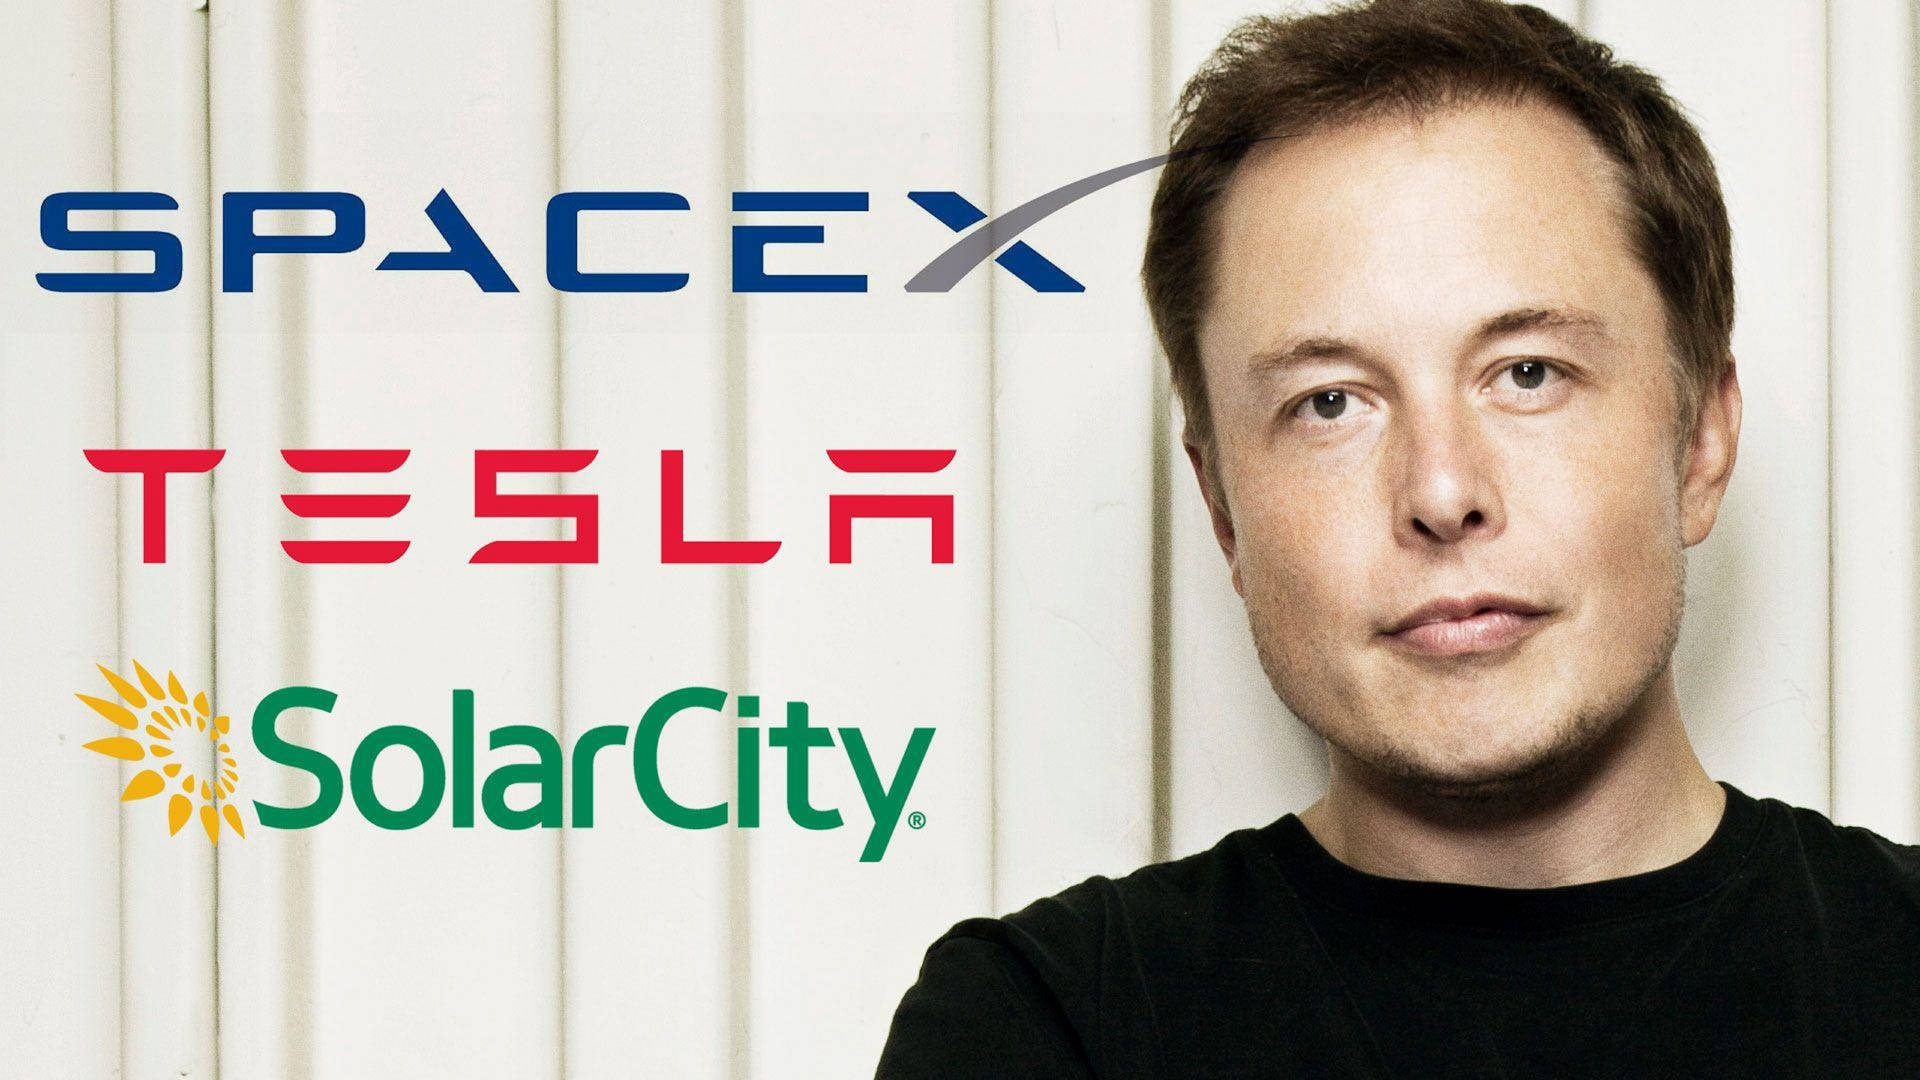 Elon Musk CEO SpaceX Tesla SolarCity Wallpaper